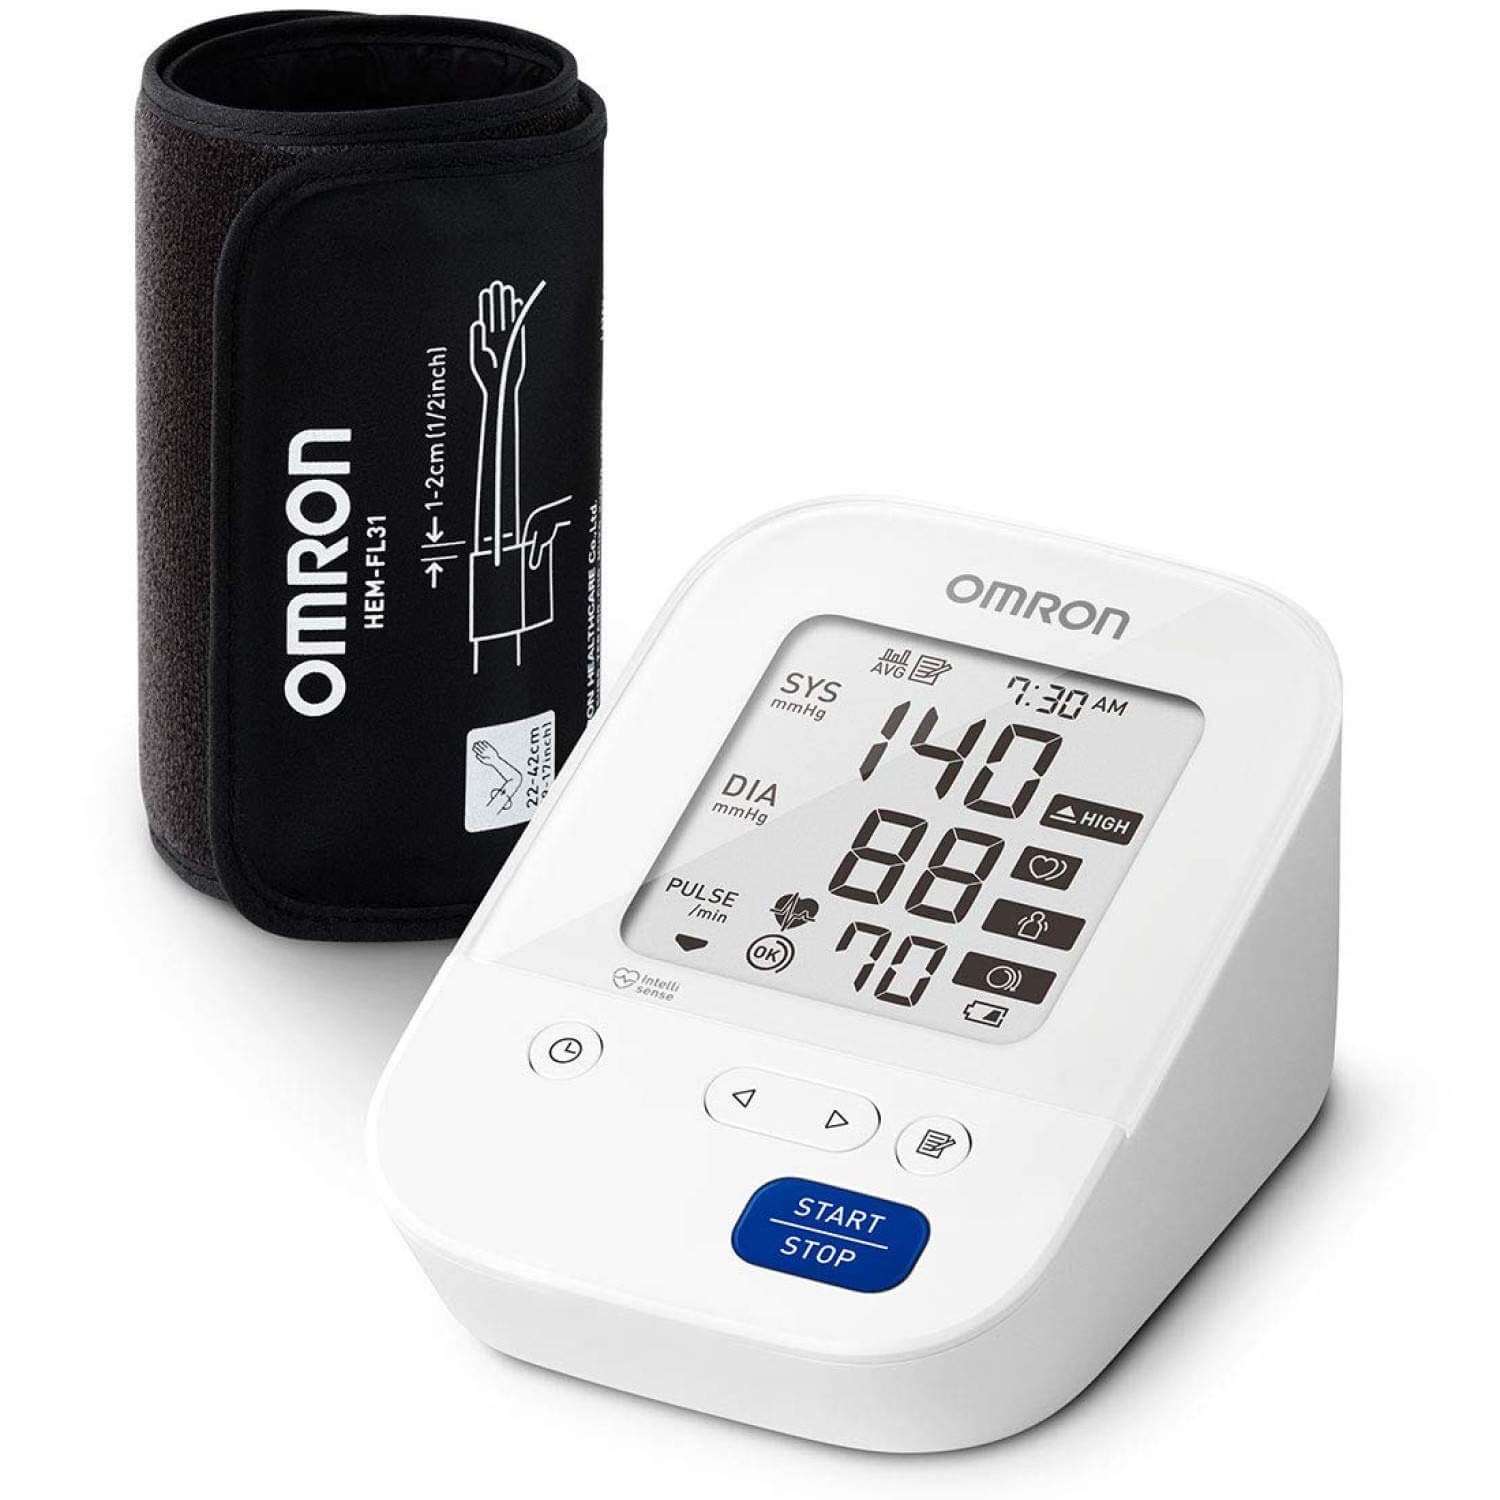 Omron Blood Pressure Monitor Wrist Hem-6220-sl fromJAPAN for sale online